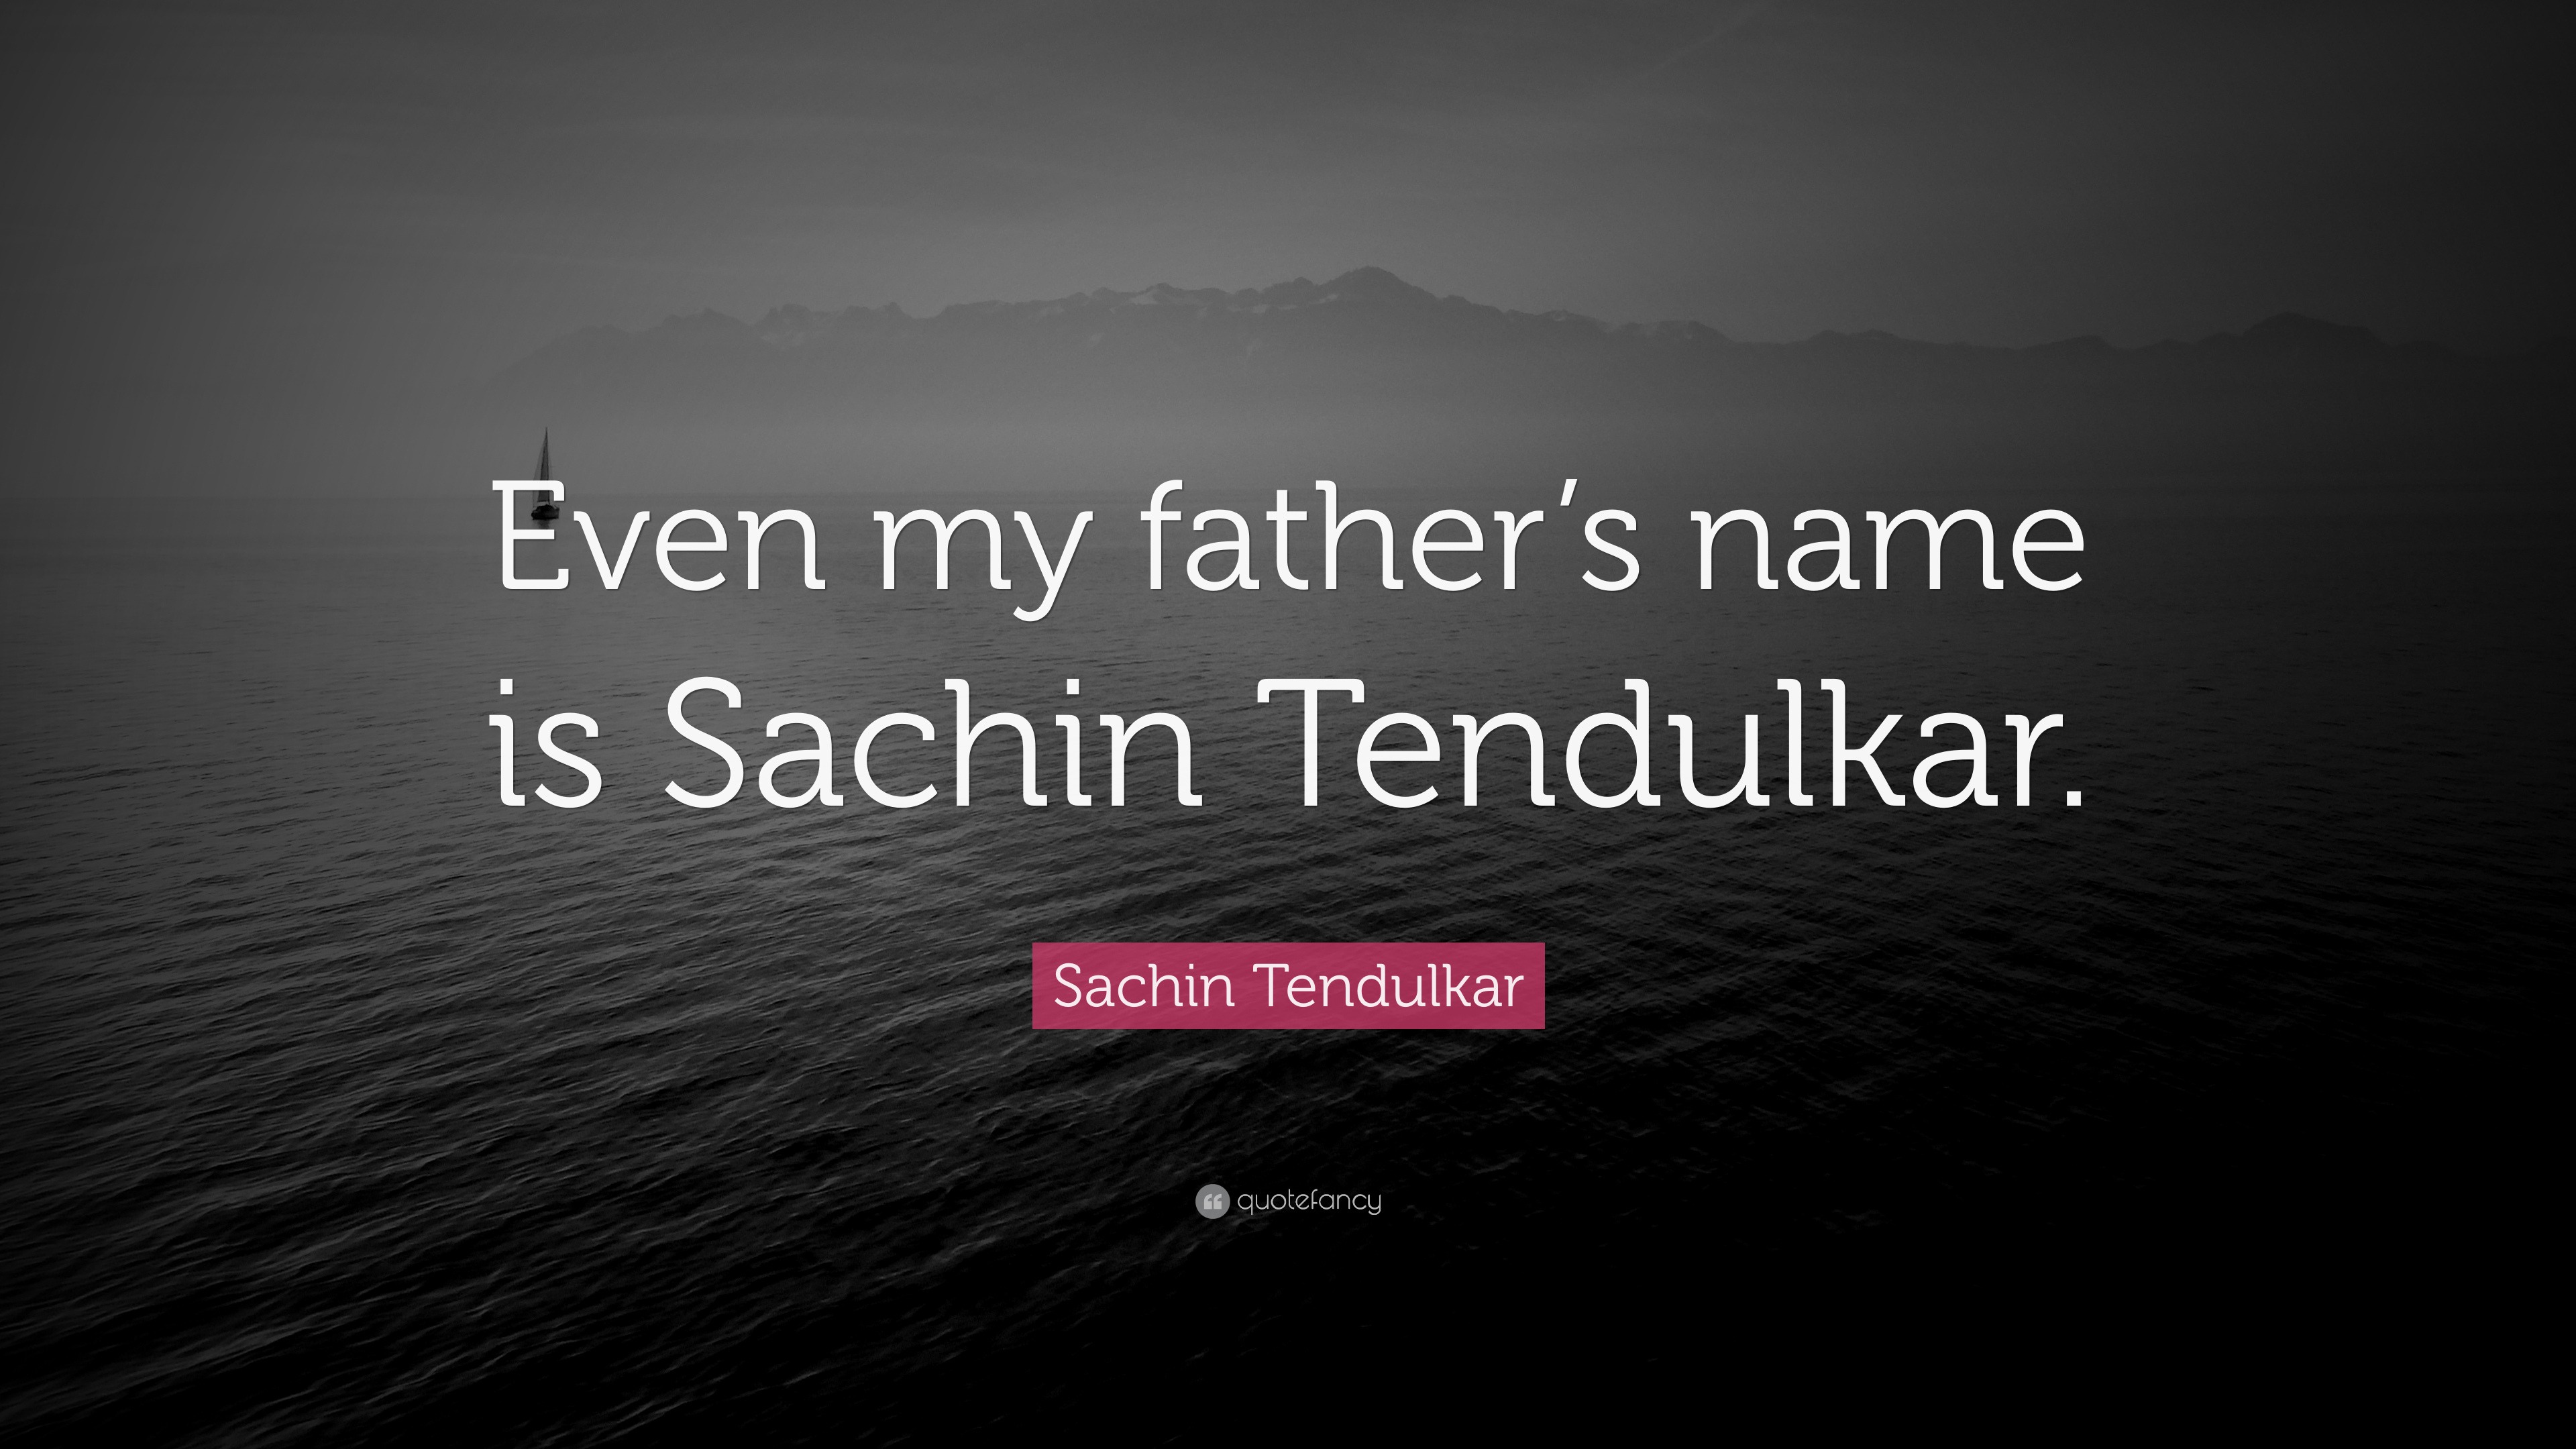 Sachin Tendulkar Quote: “Even my father's name is Sachin Tendulkar.”